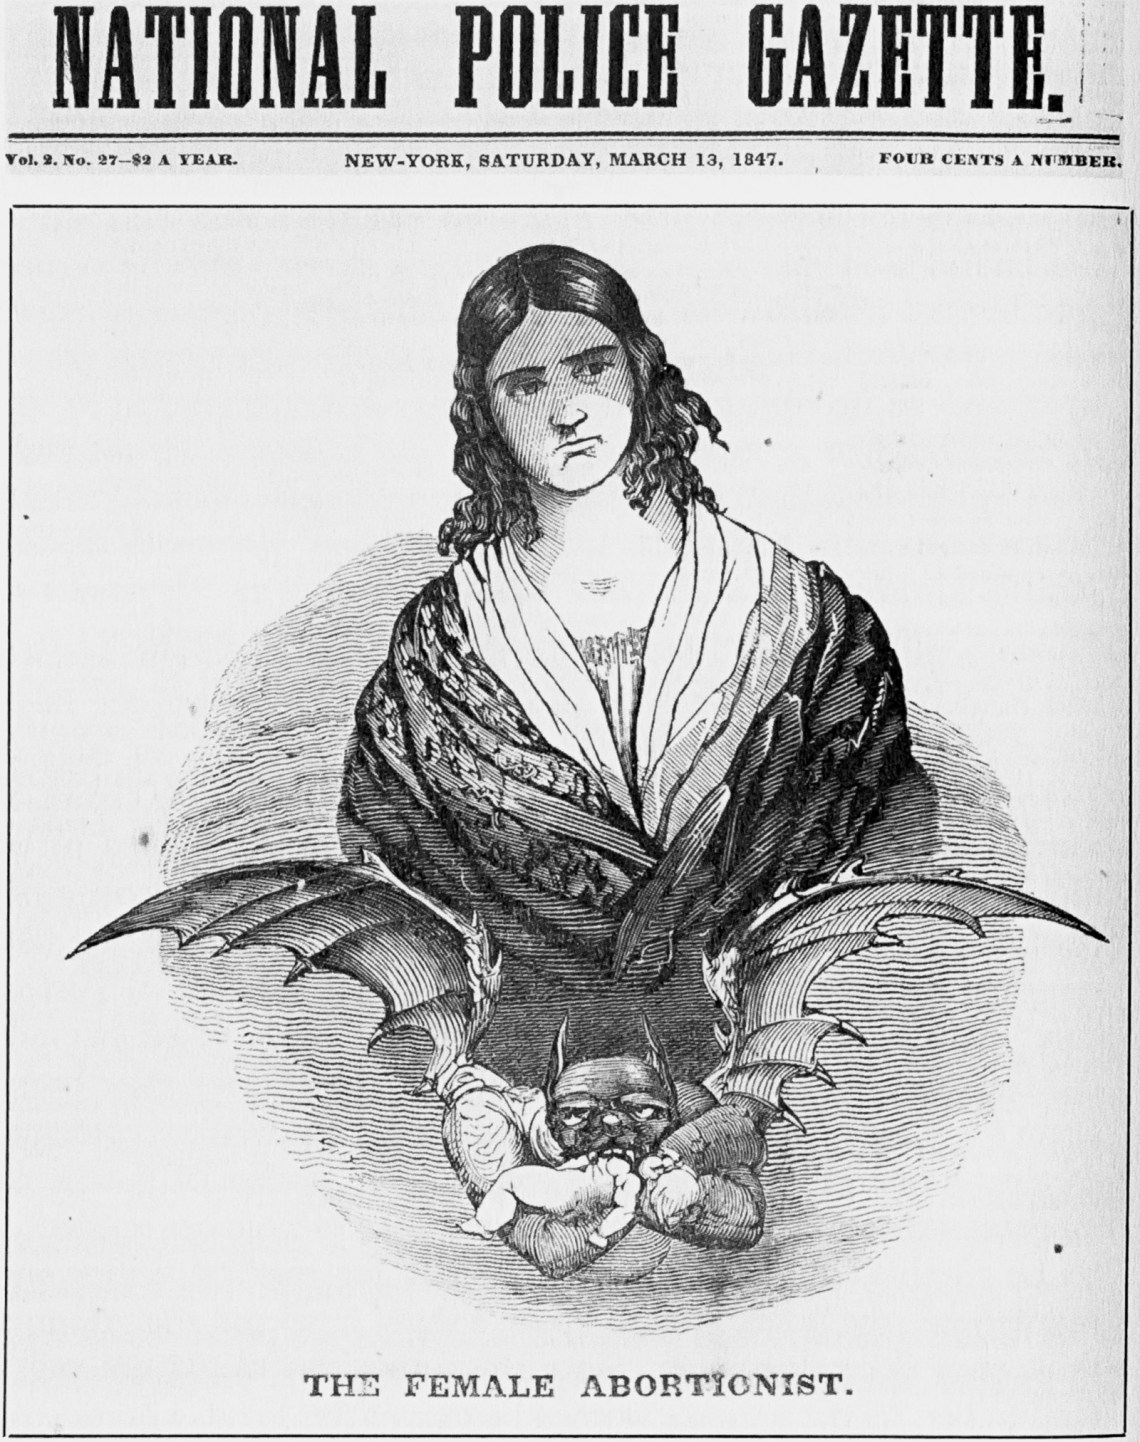 A cartoon depicting Ann Lohman, aka Madame Restell